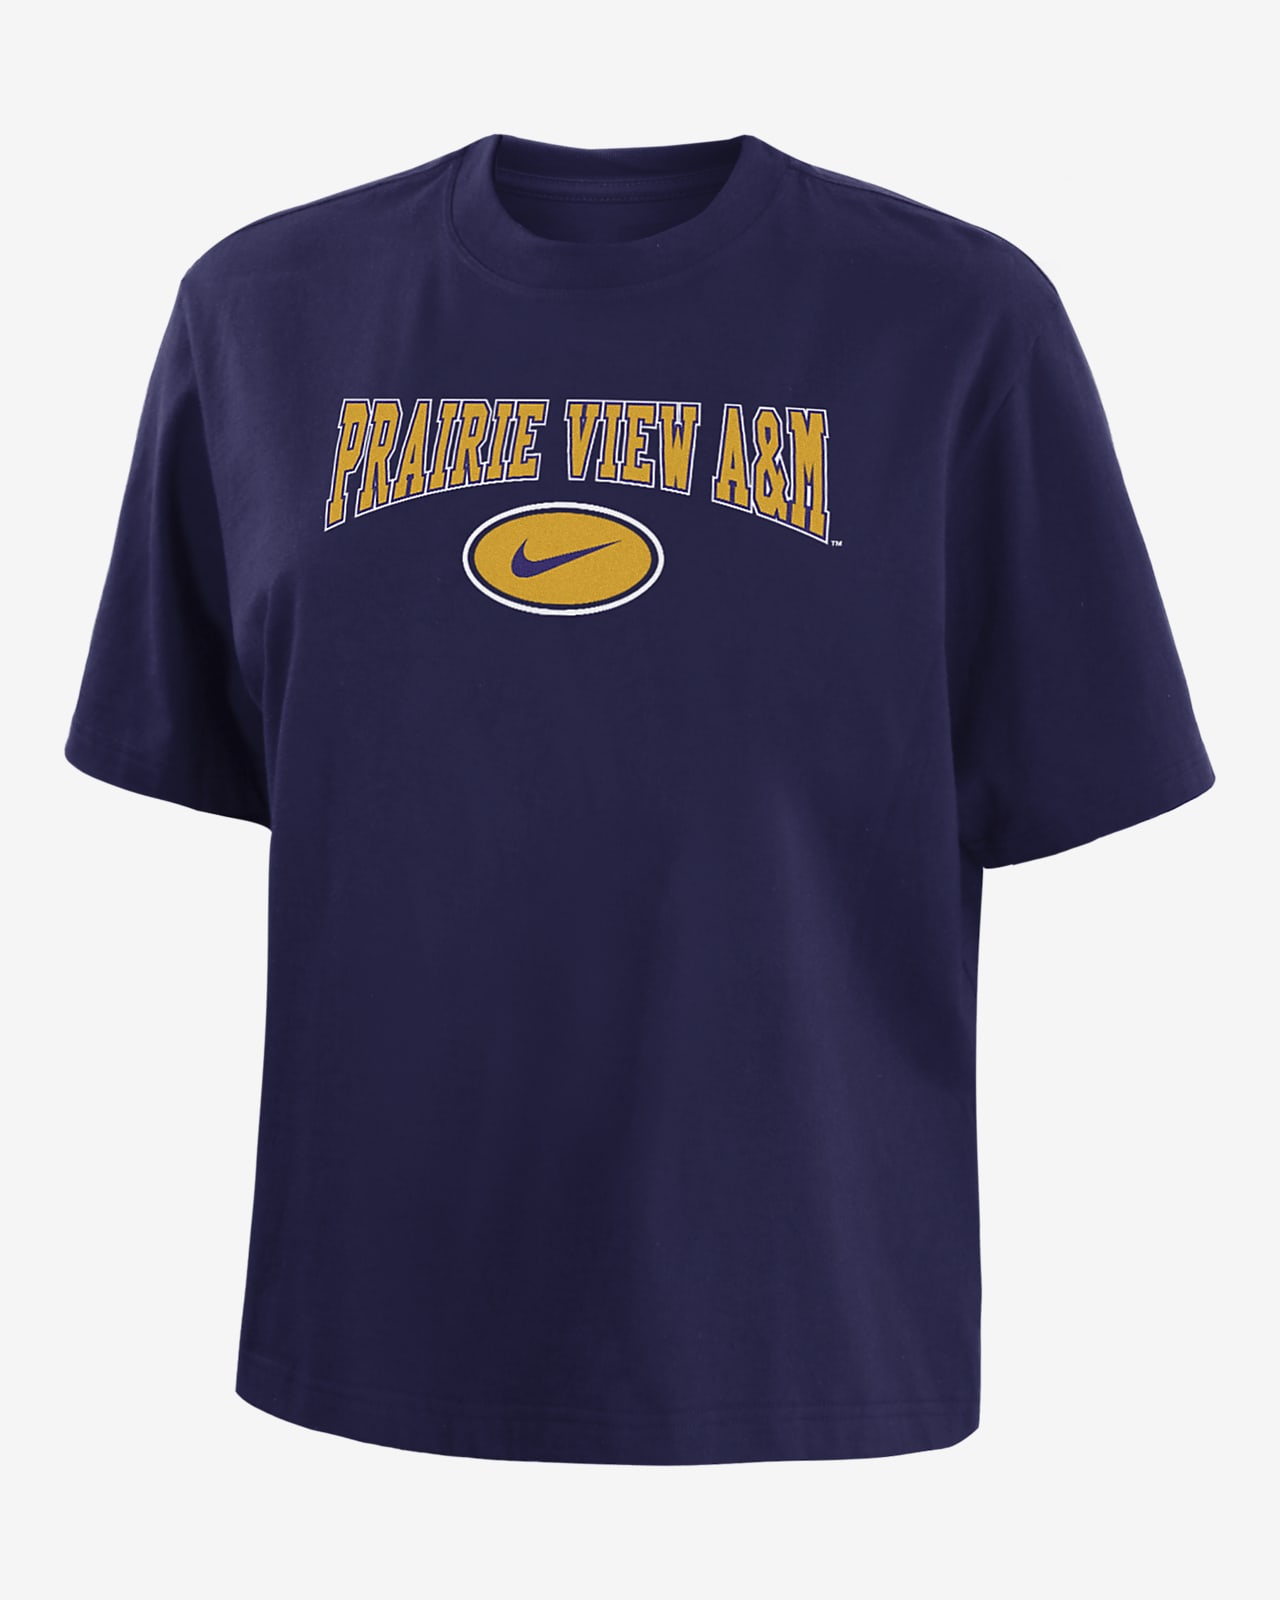 Prairie View A&M Women's Nike College Boxy T-Shirt